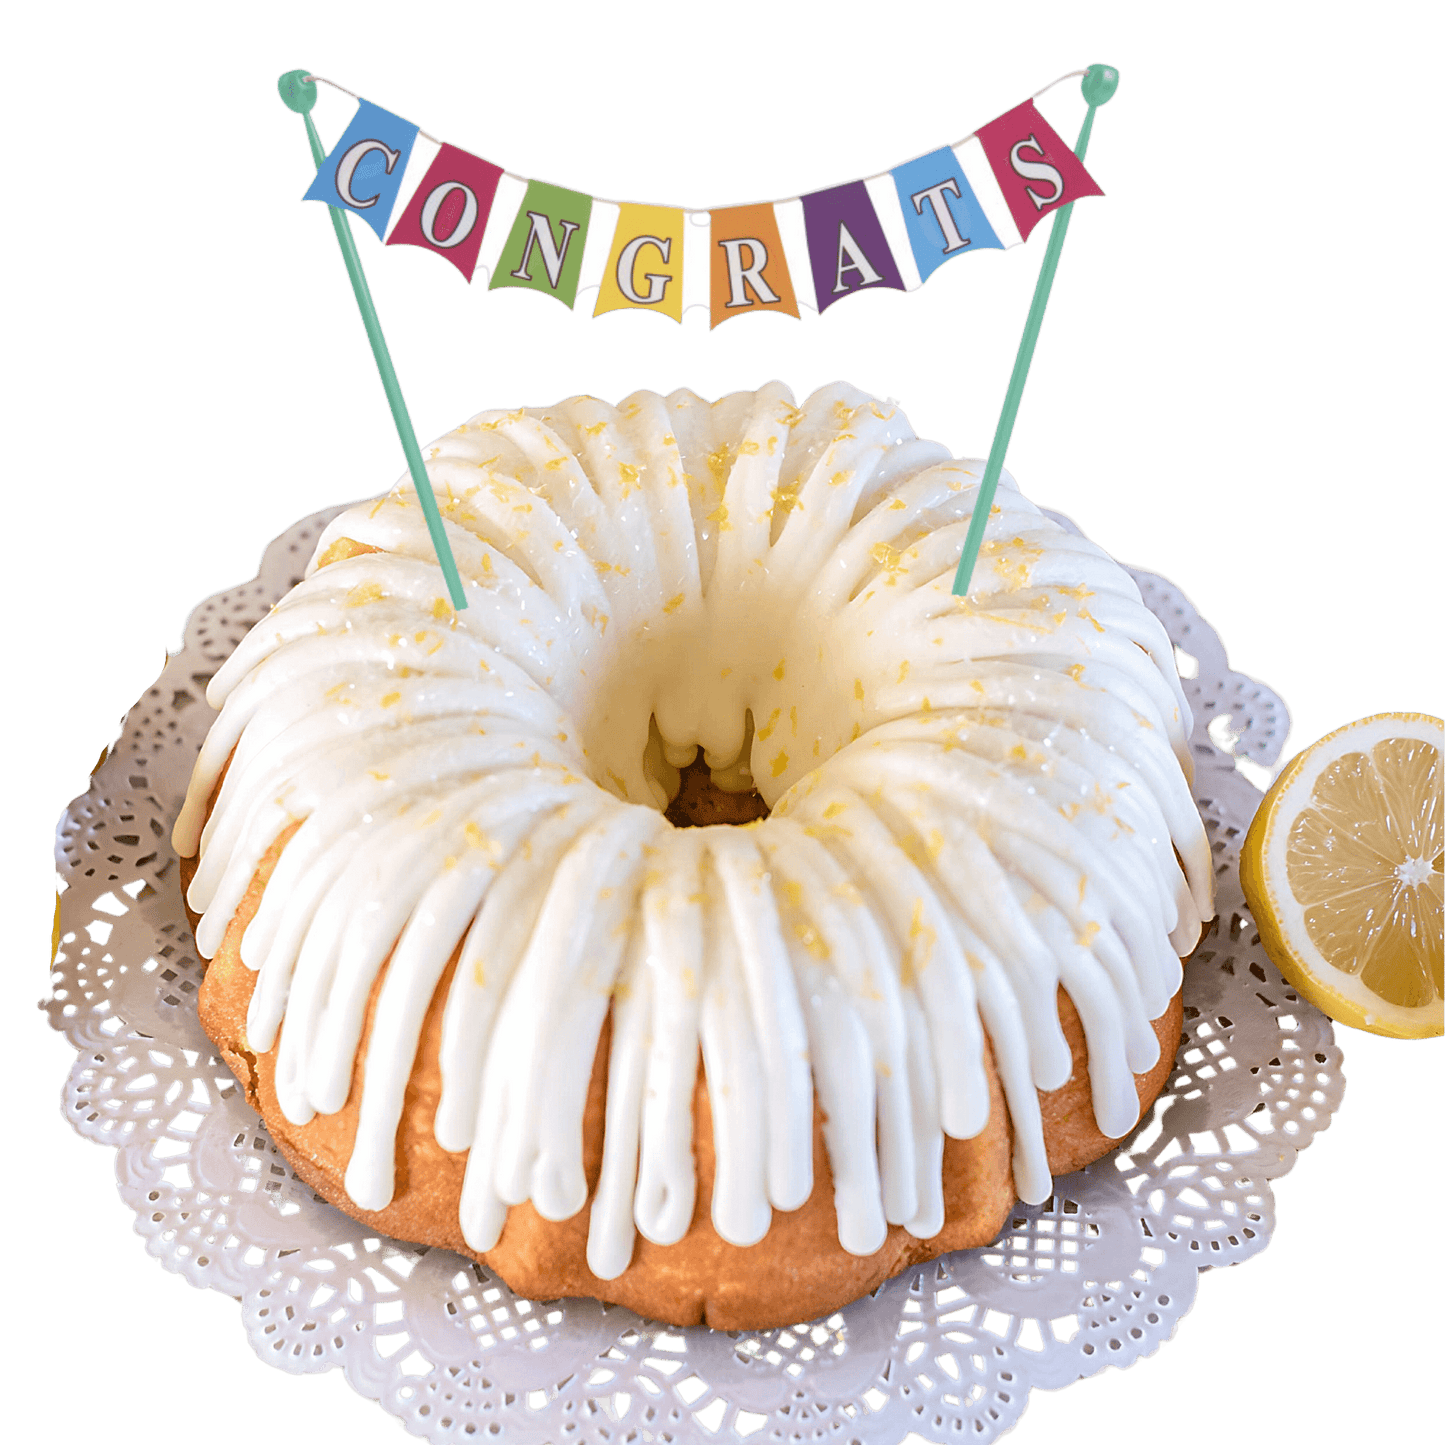 Big Bundt Cakes | "CONGRATS" Banner Bundt Cake